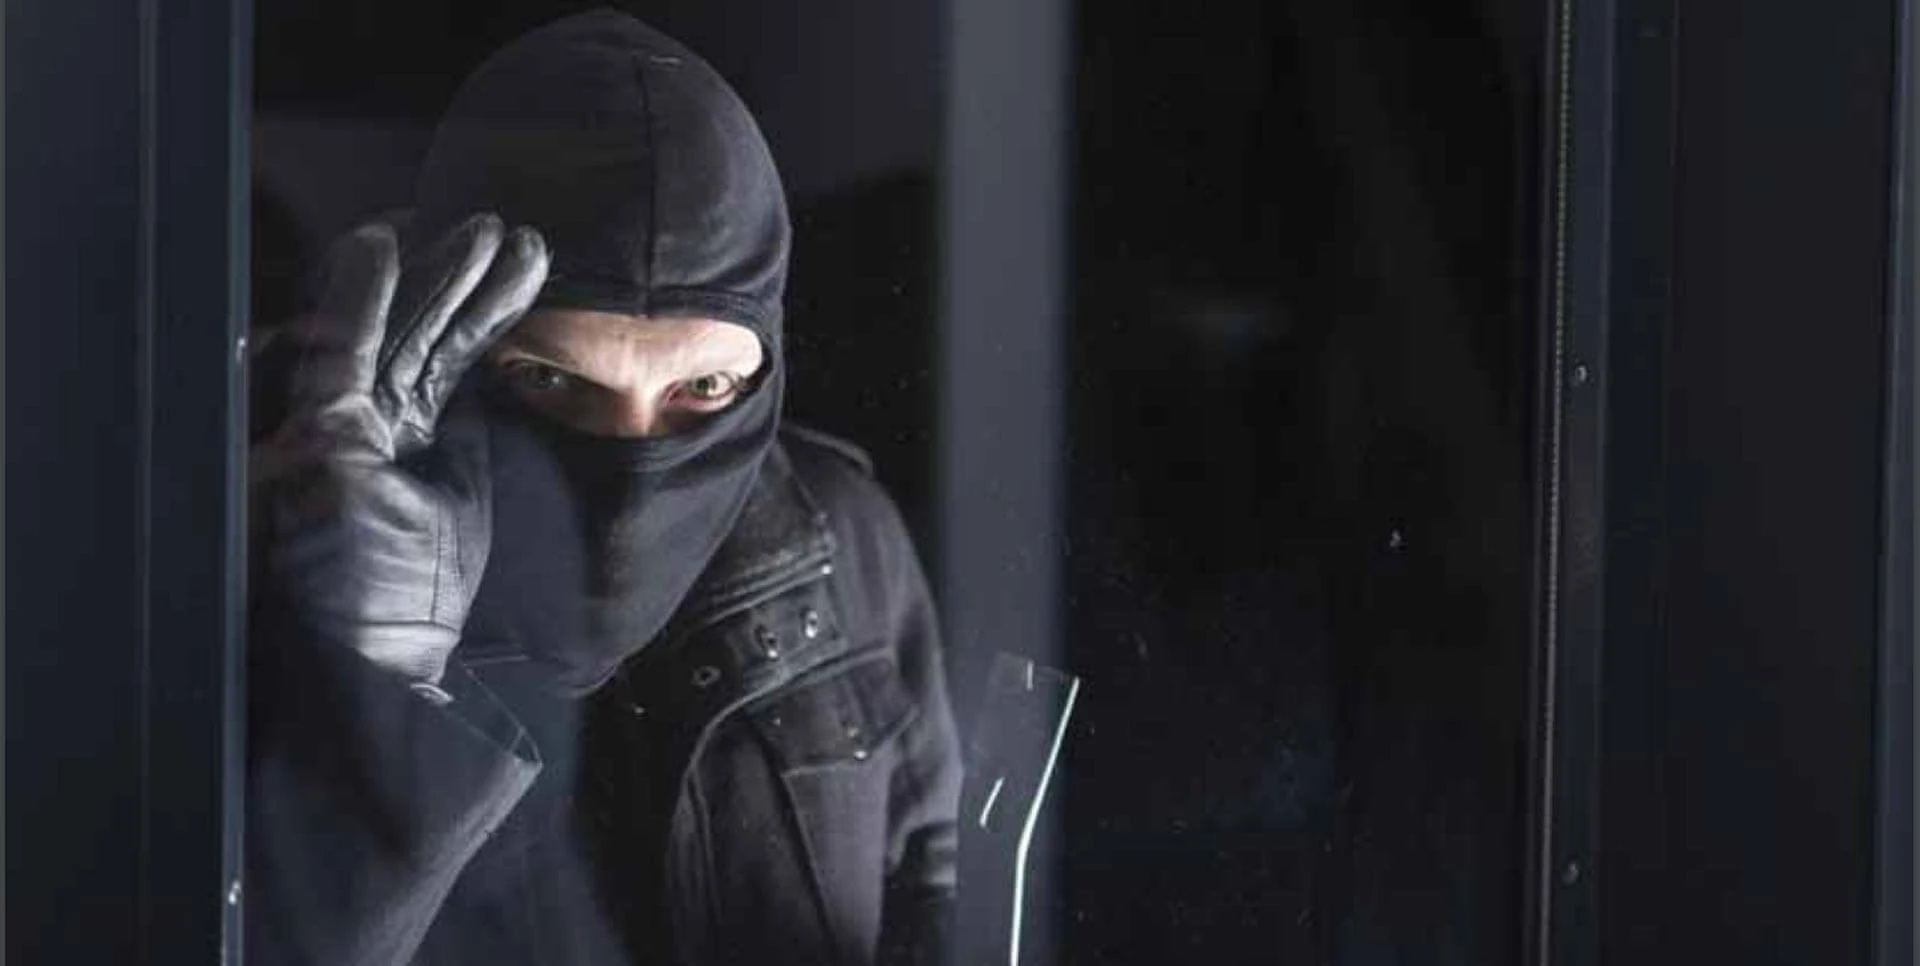 Burglar-resistant systems